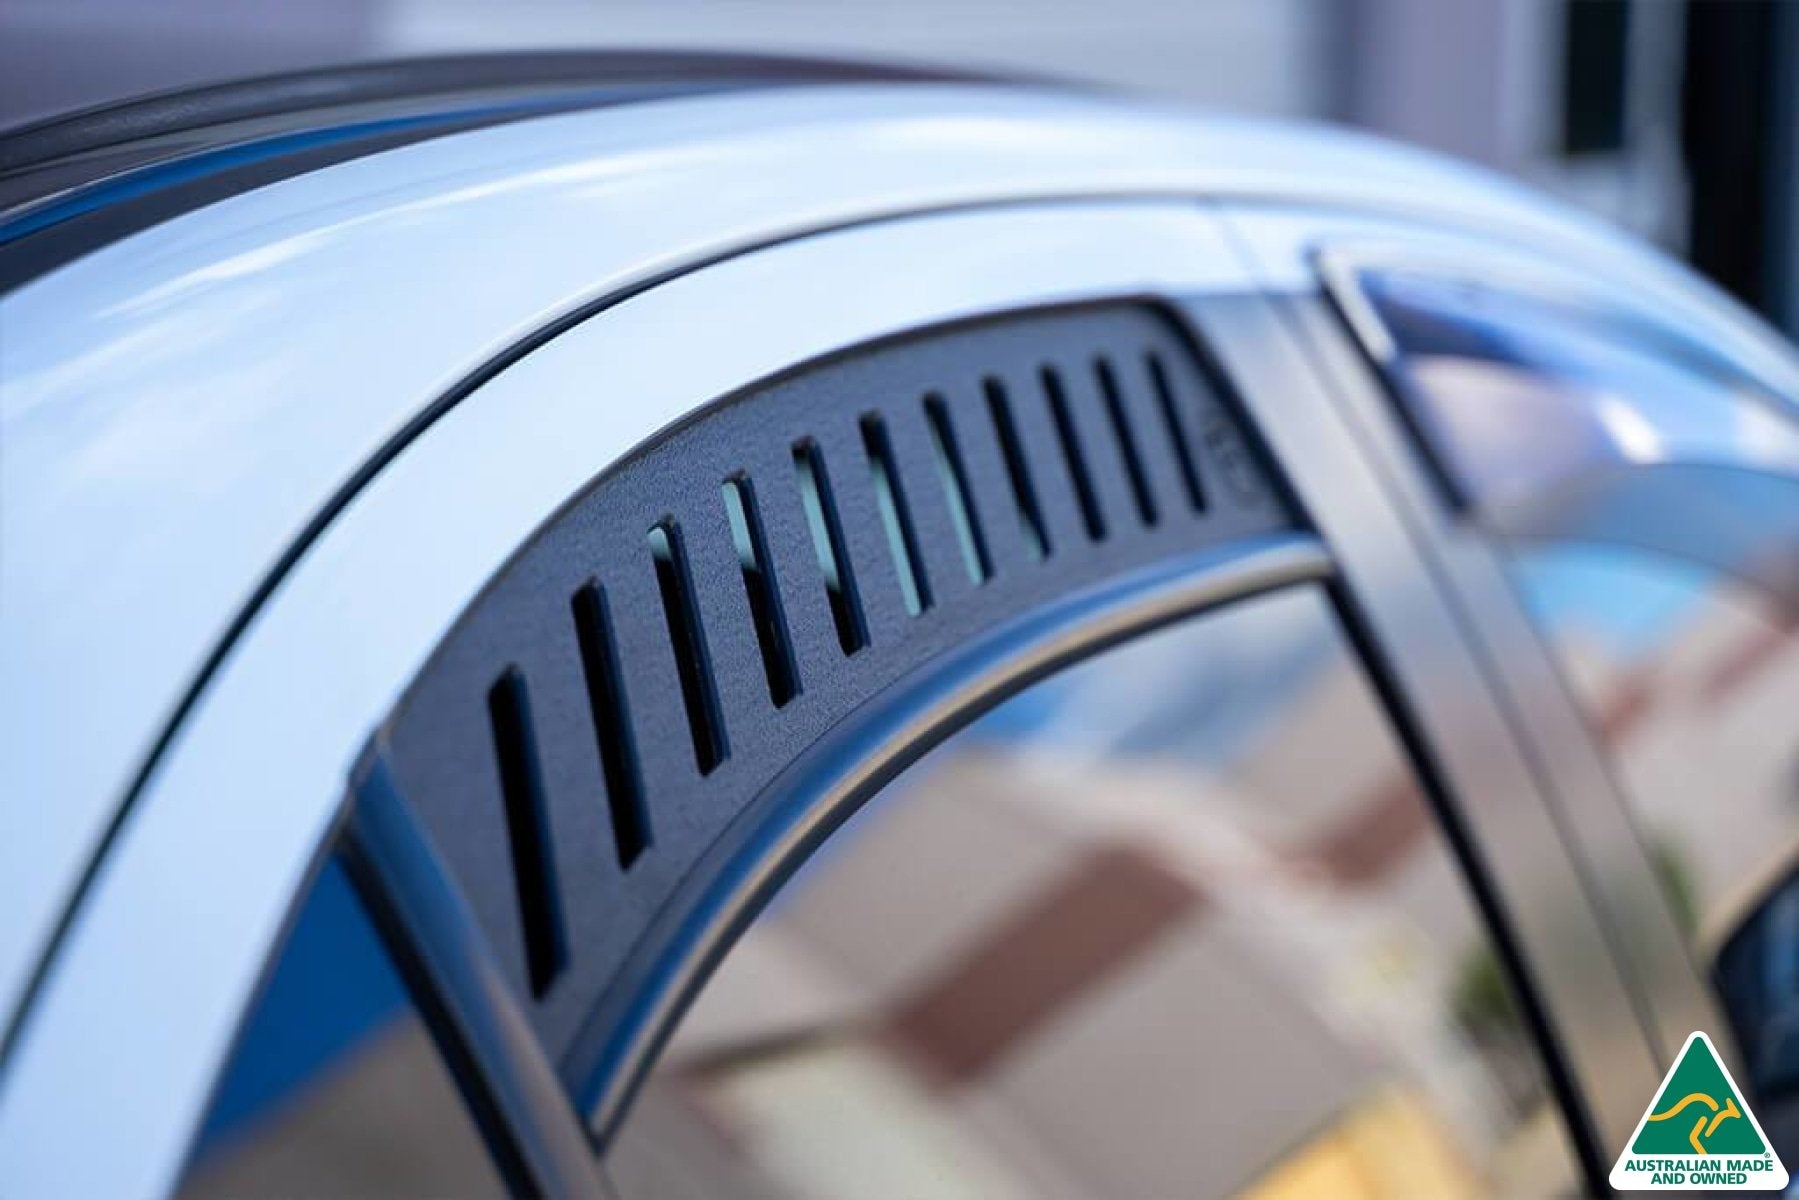 Lancer Evolution X/Ralliart CJ Window Vents (Pair) - MODE Auto Concepts